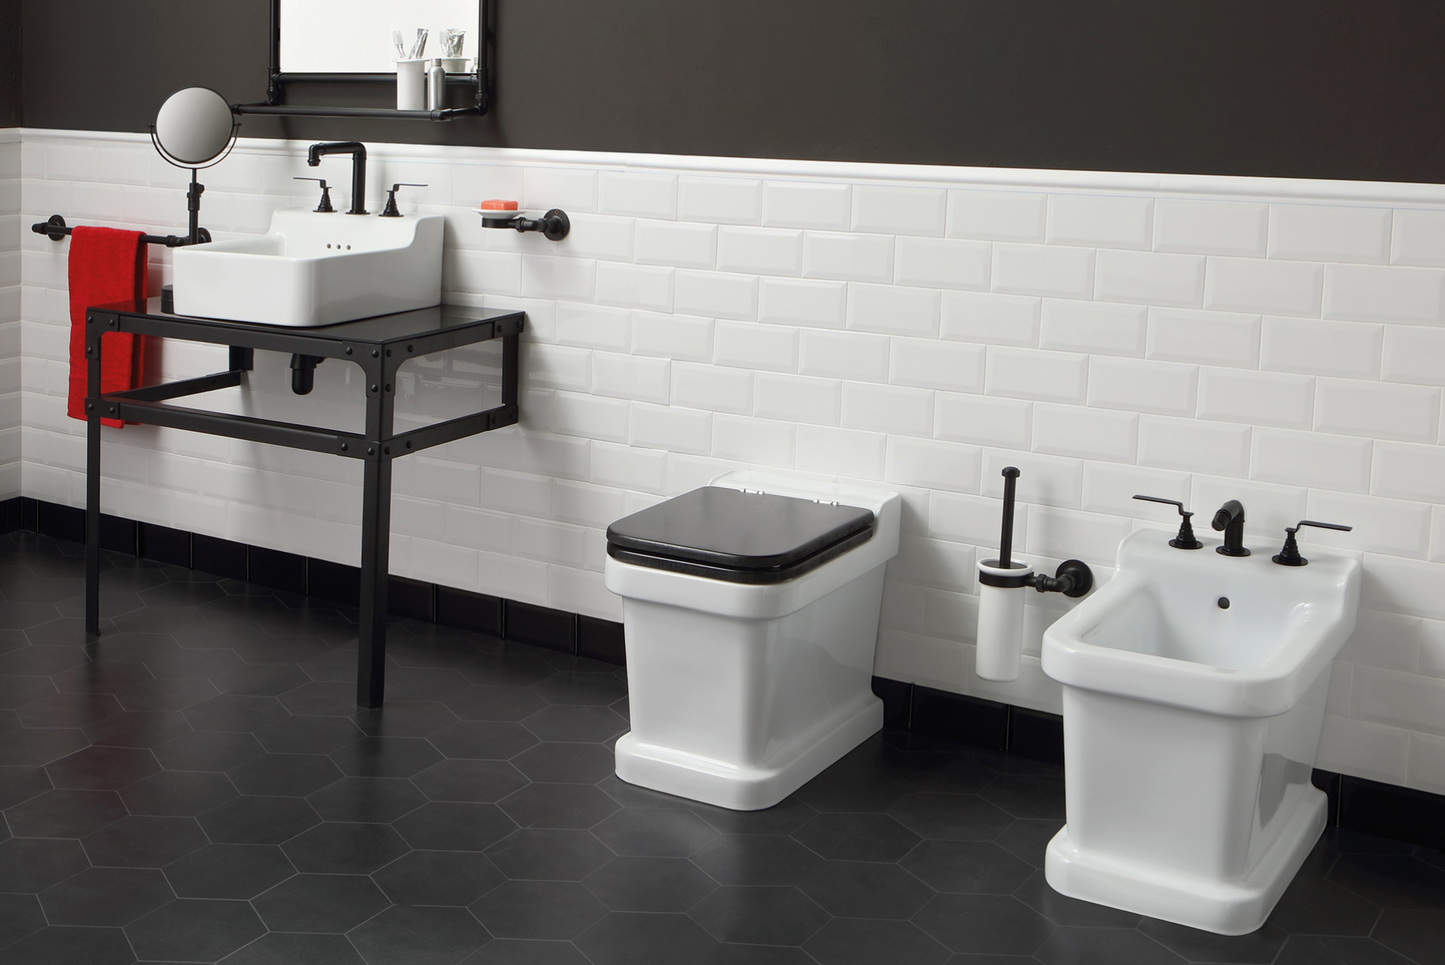 Industrialis floor-standing ceramic toilet in Industrial style